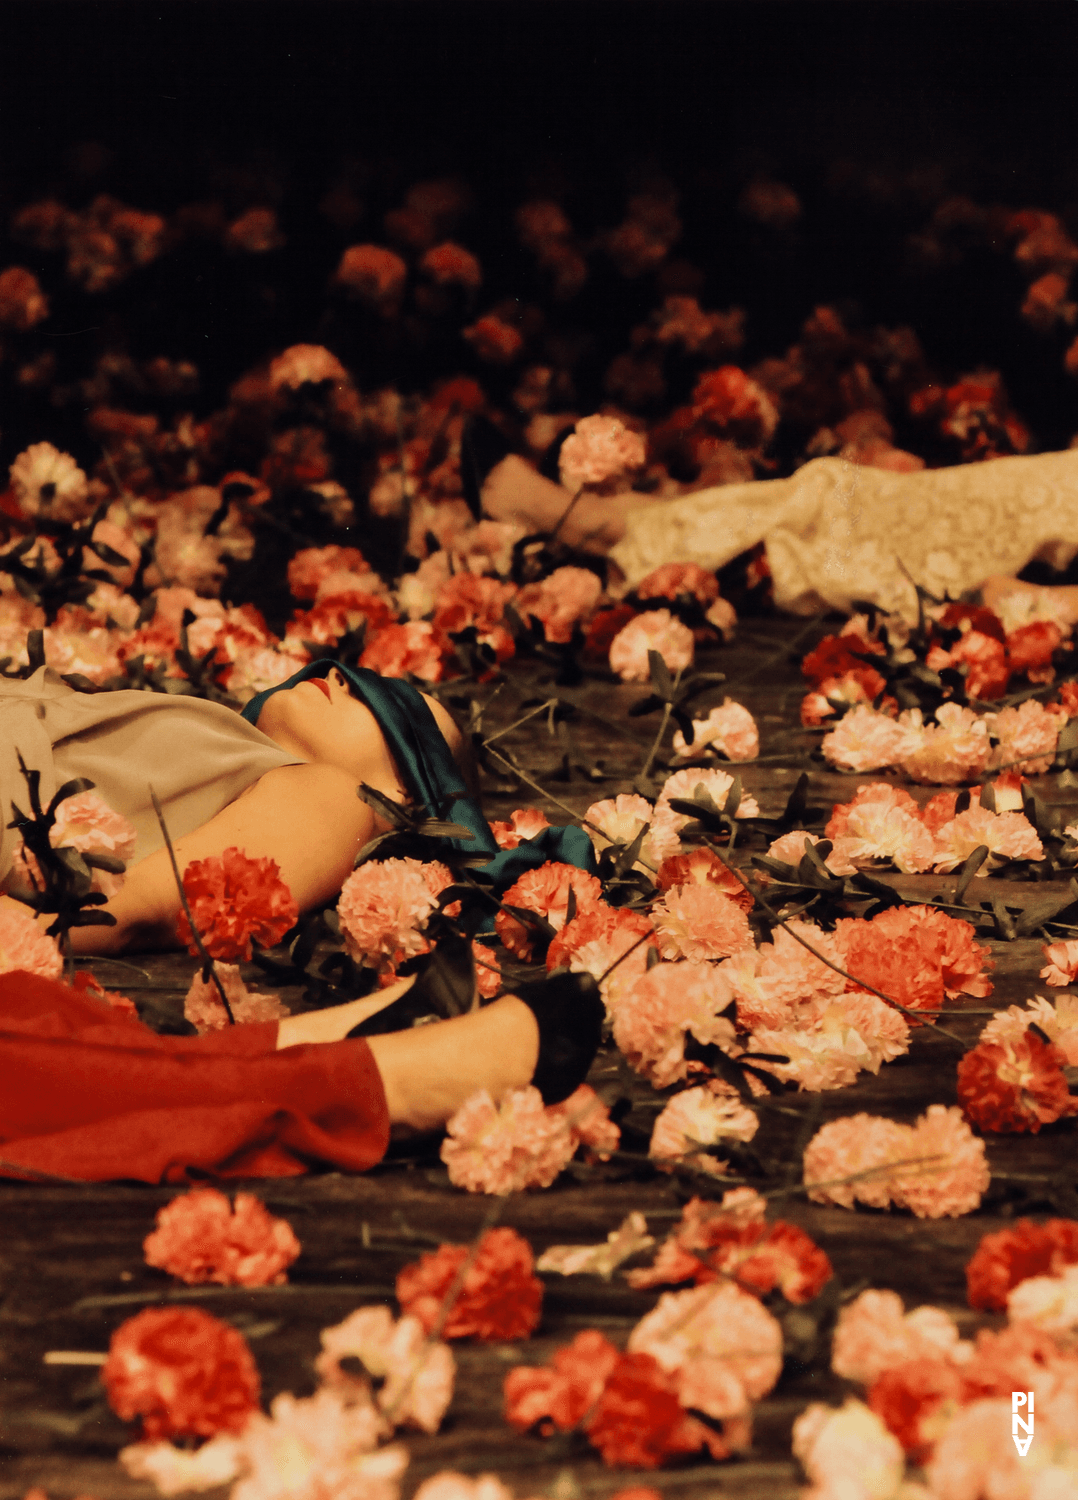 Clémentine Deluy in “Nelken (Carnations)” by Pina Bausch